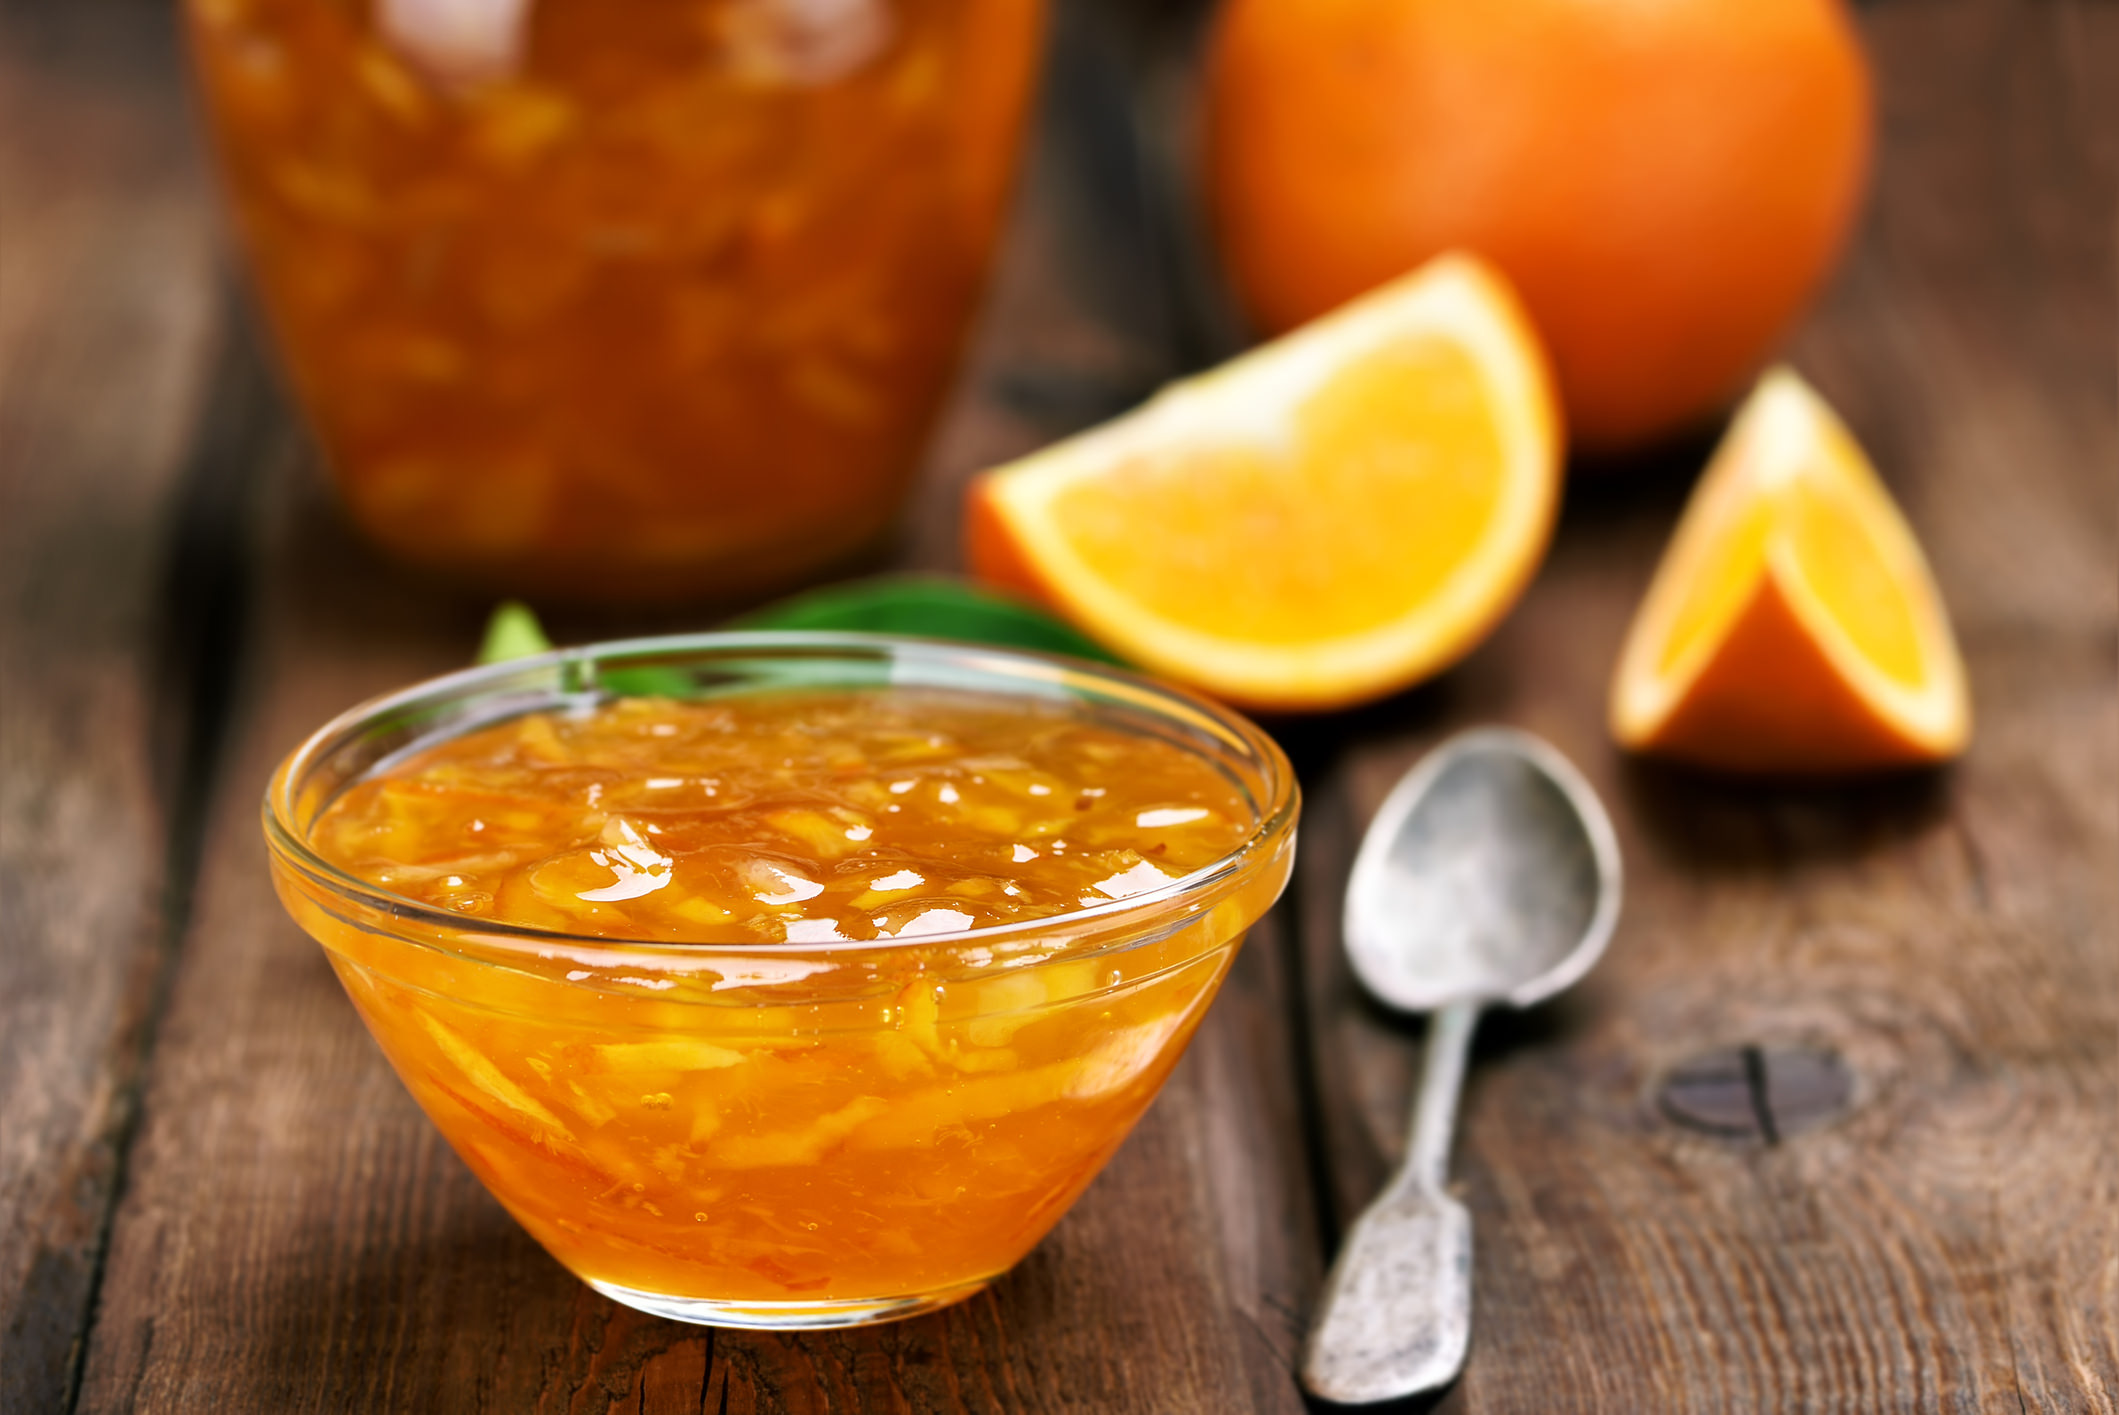 How to make orange jam